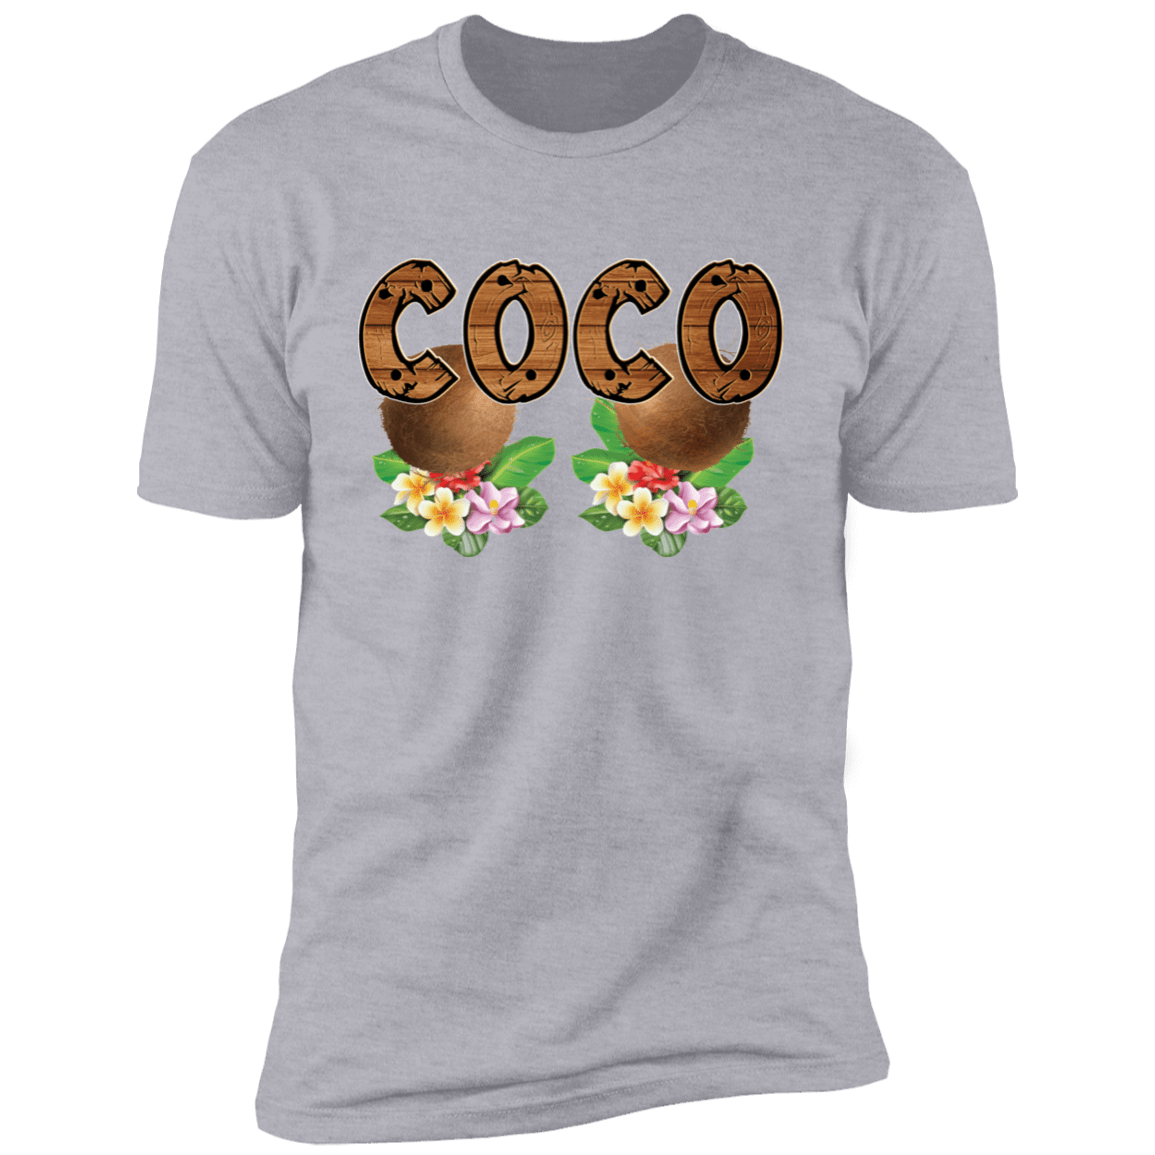 "COCO" Premium Short Sleeve T-Shirt